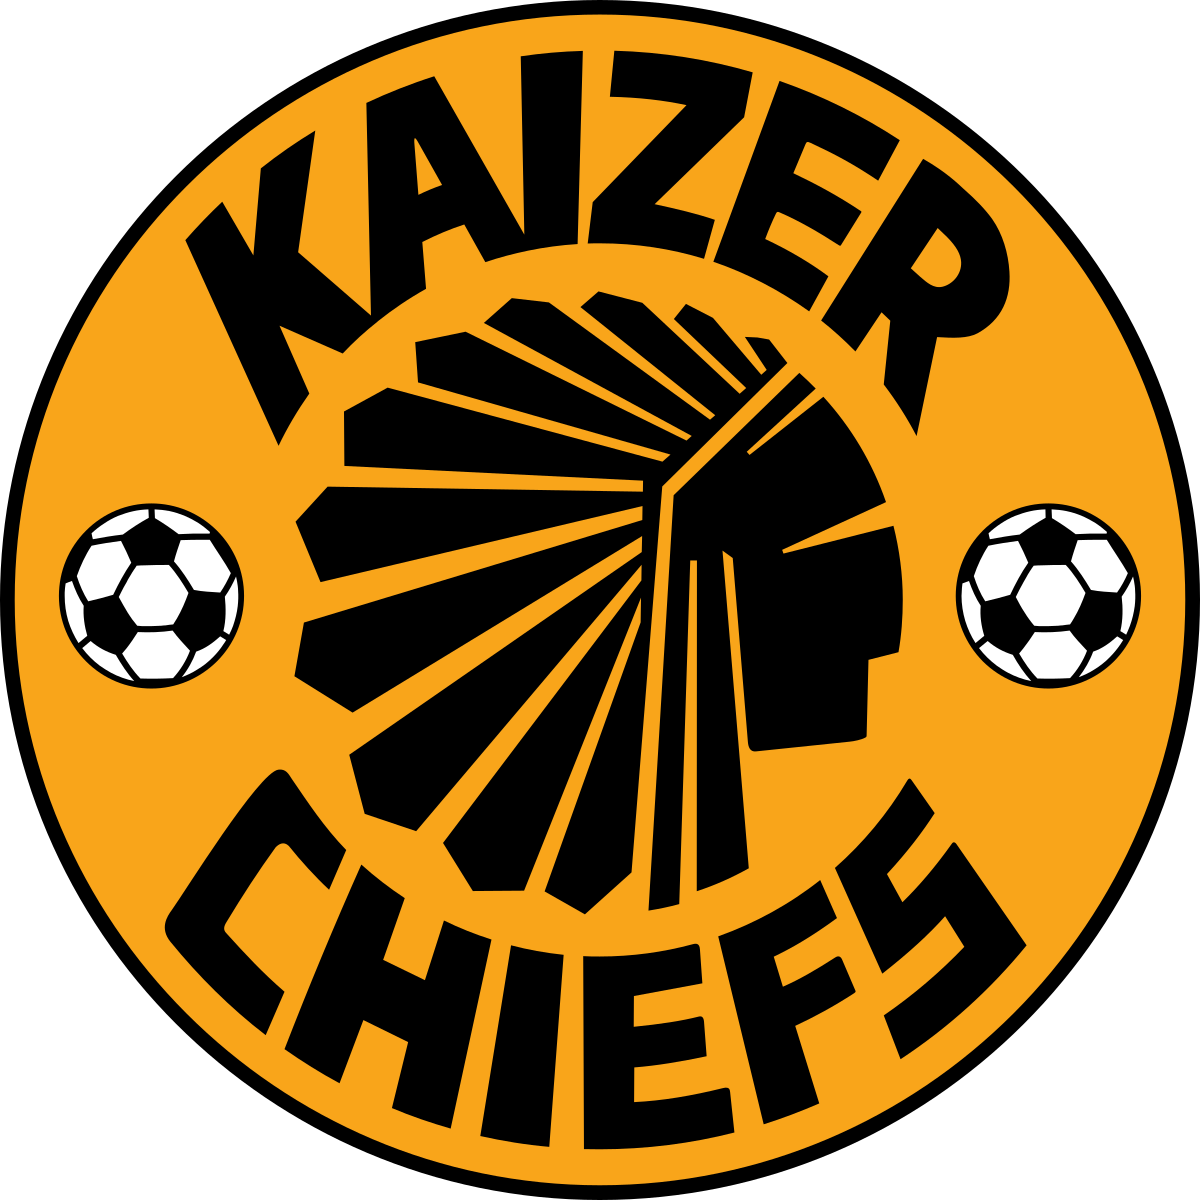 Kaizer Chiefs Football Kits, Cheap Shirts